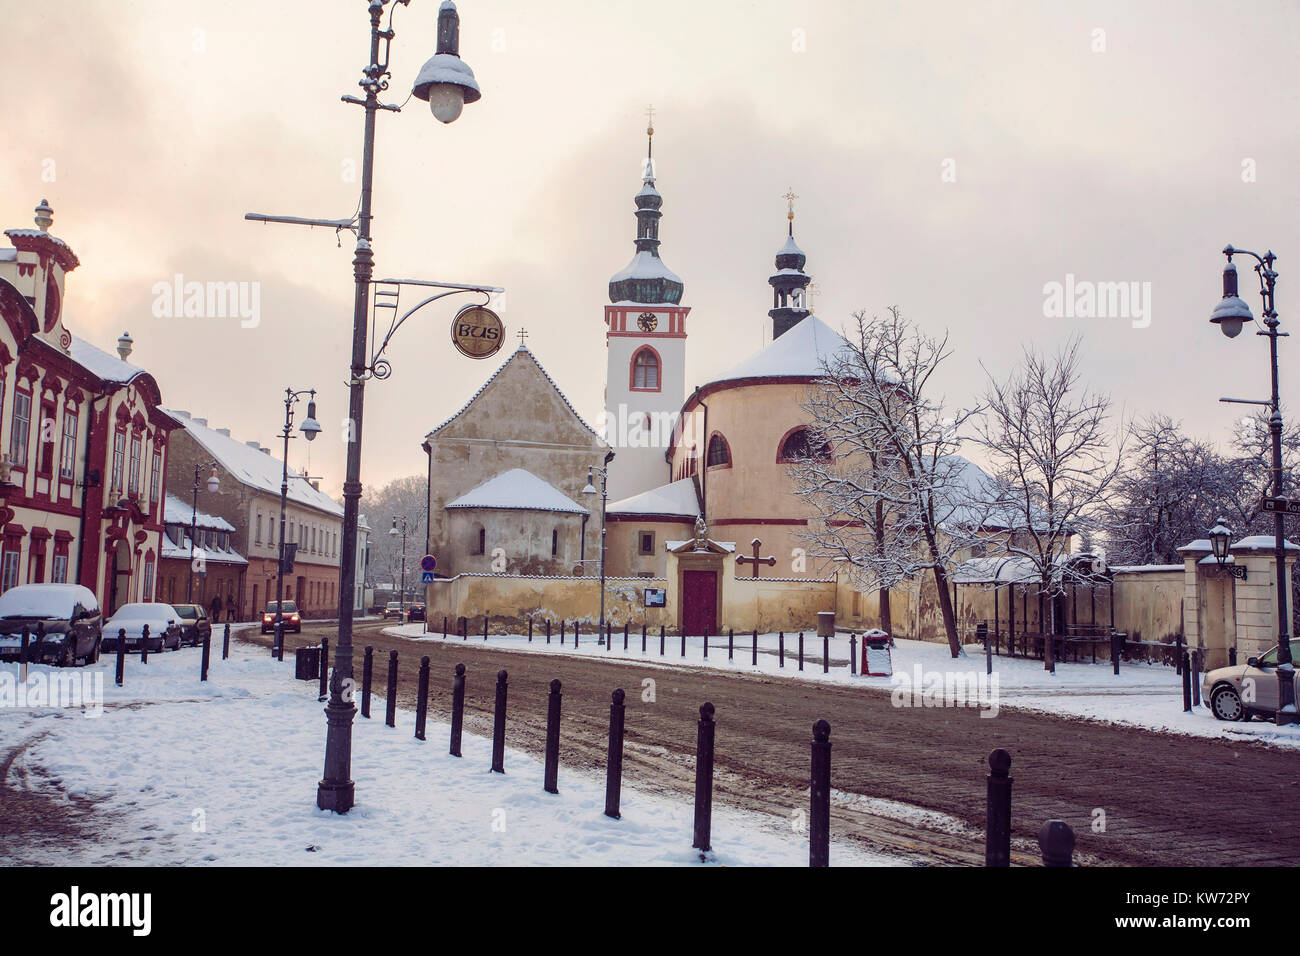 Brandys nad Labem - Stara Boleslav - Saint Wenceslas basilica and St Kliment church (national cultural landmarks), Czech republic, January 2013 Stock Photo